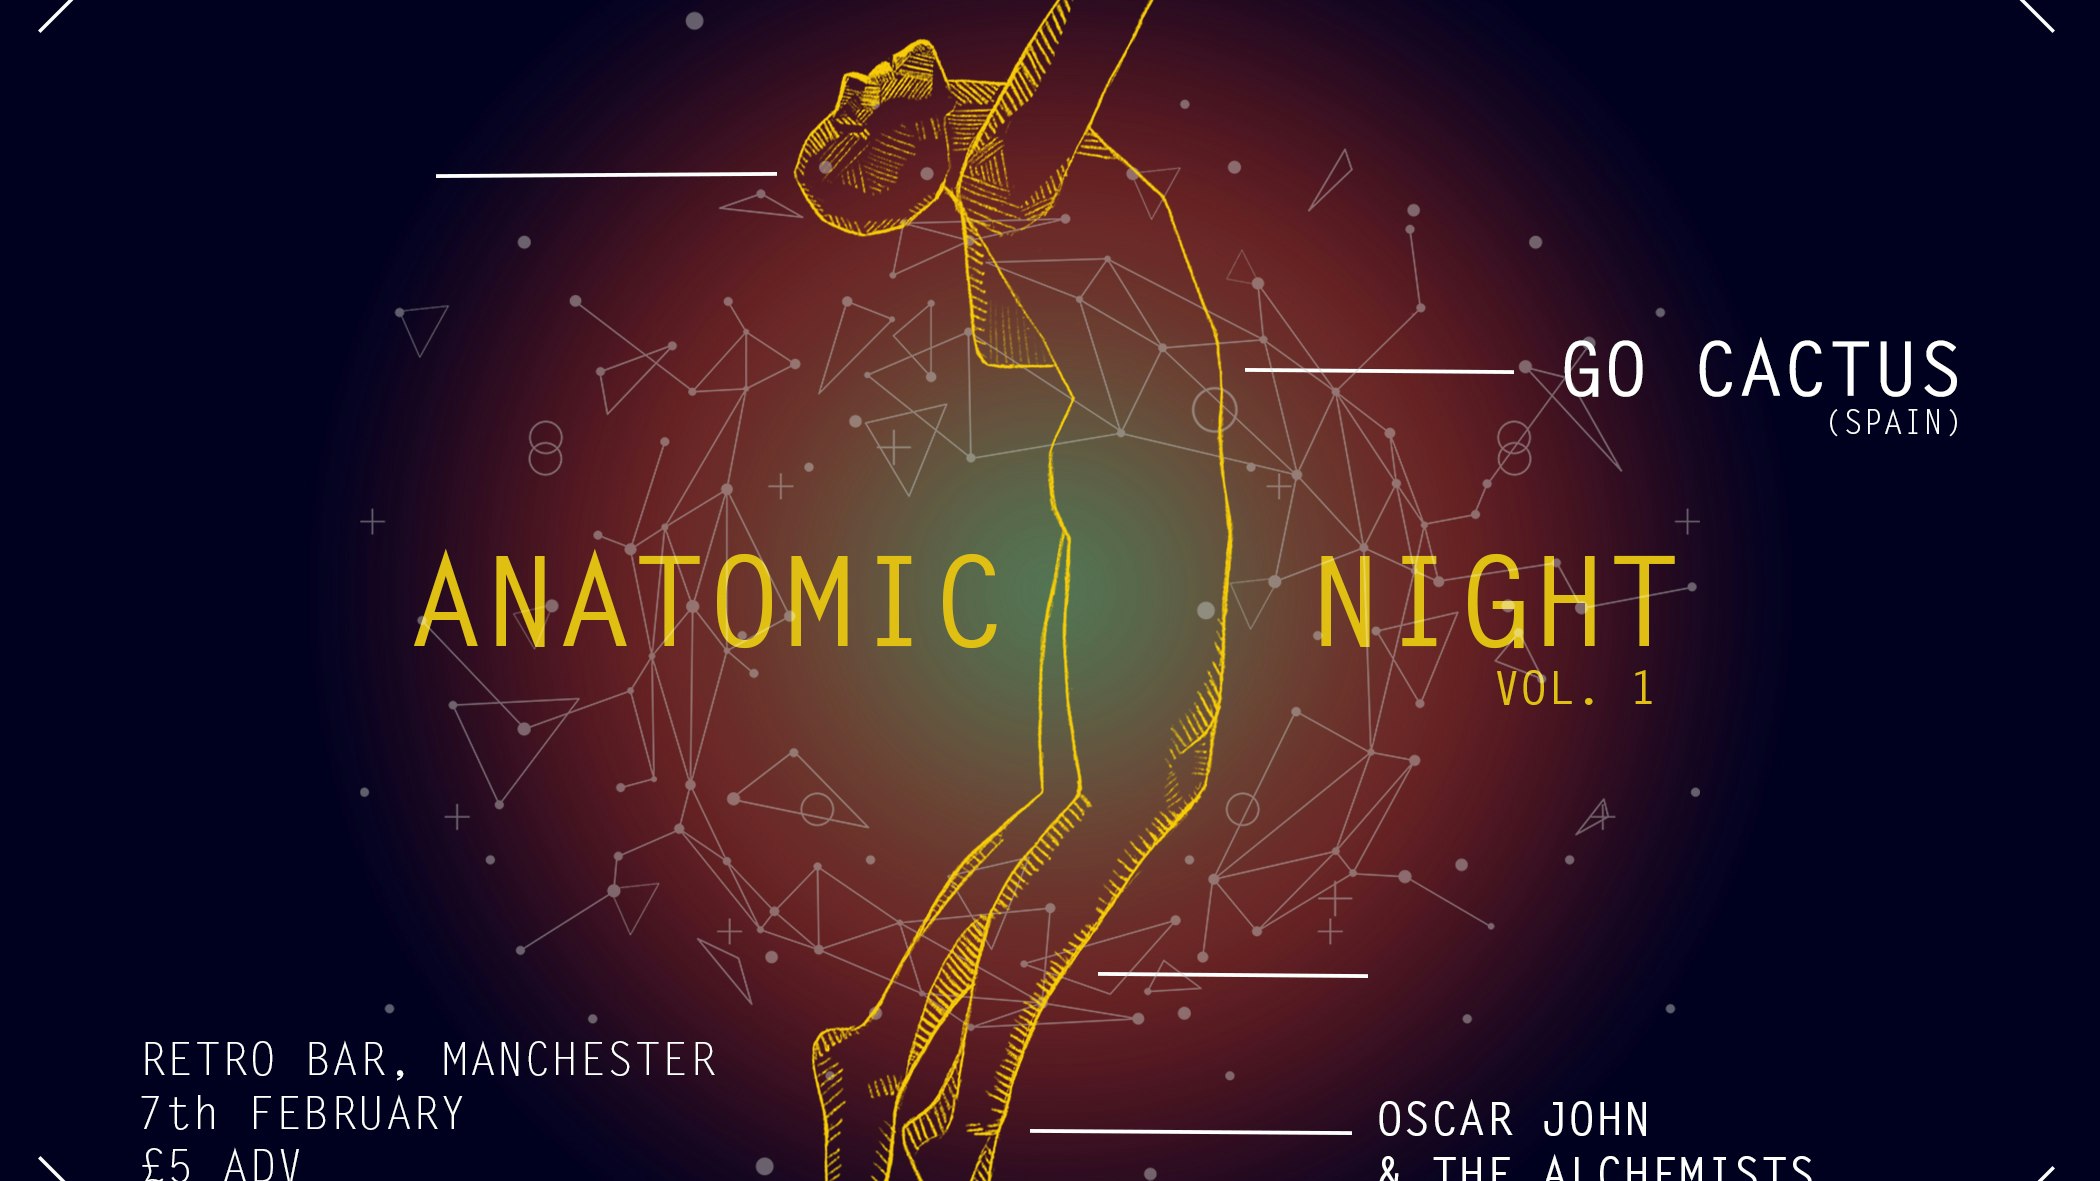 ANATOMIC NIGHT vol.1. with Go Cactus, Oscar John and The Alchemists